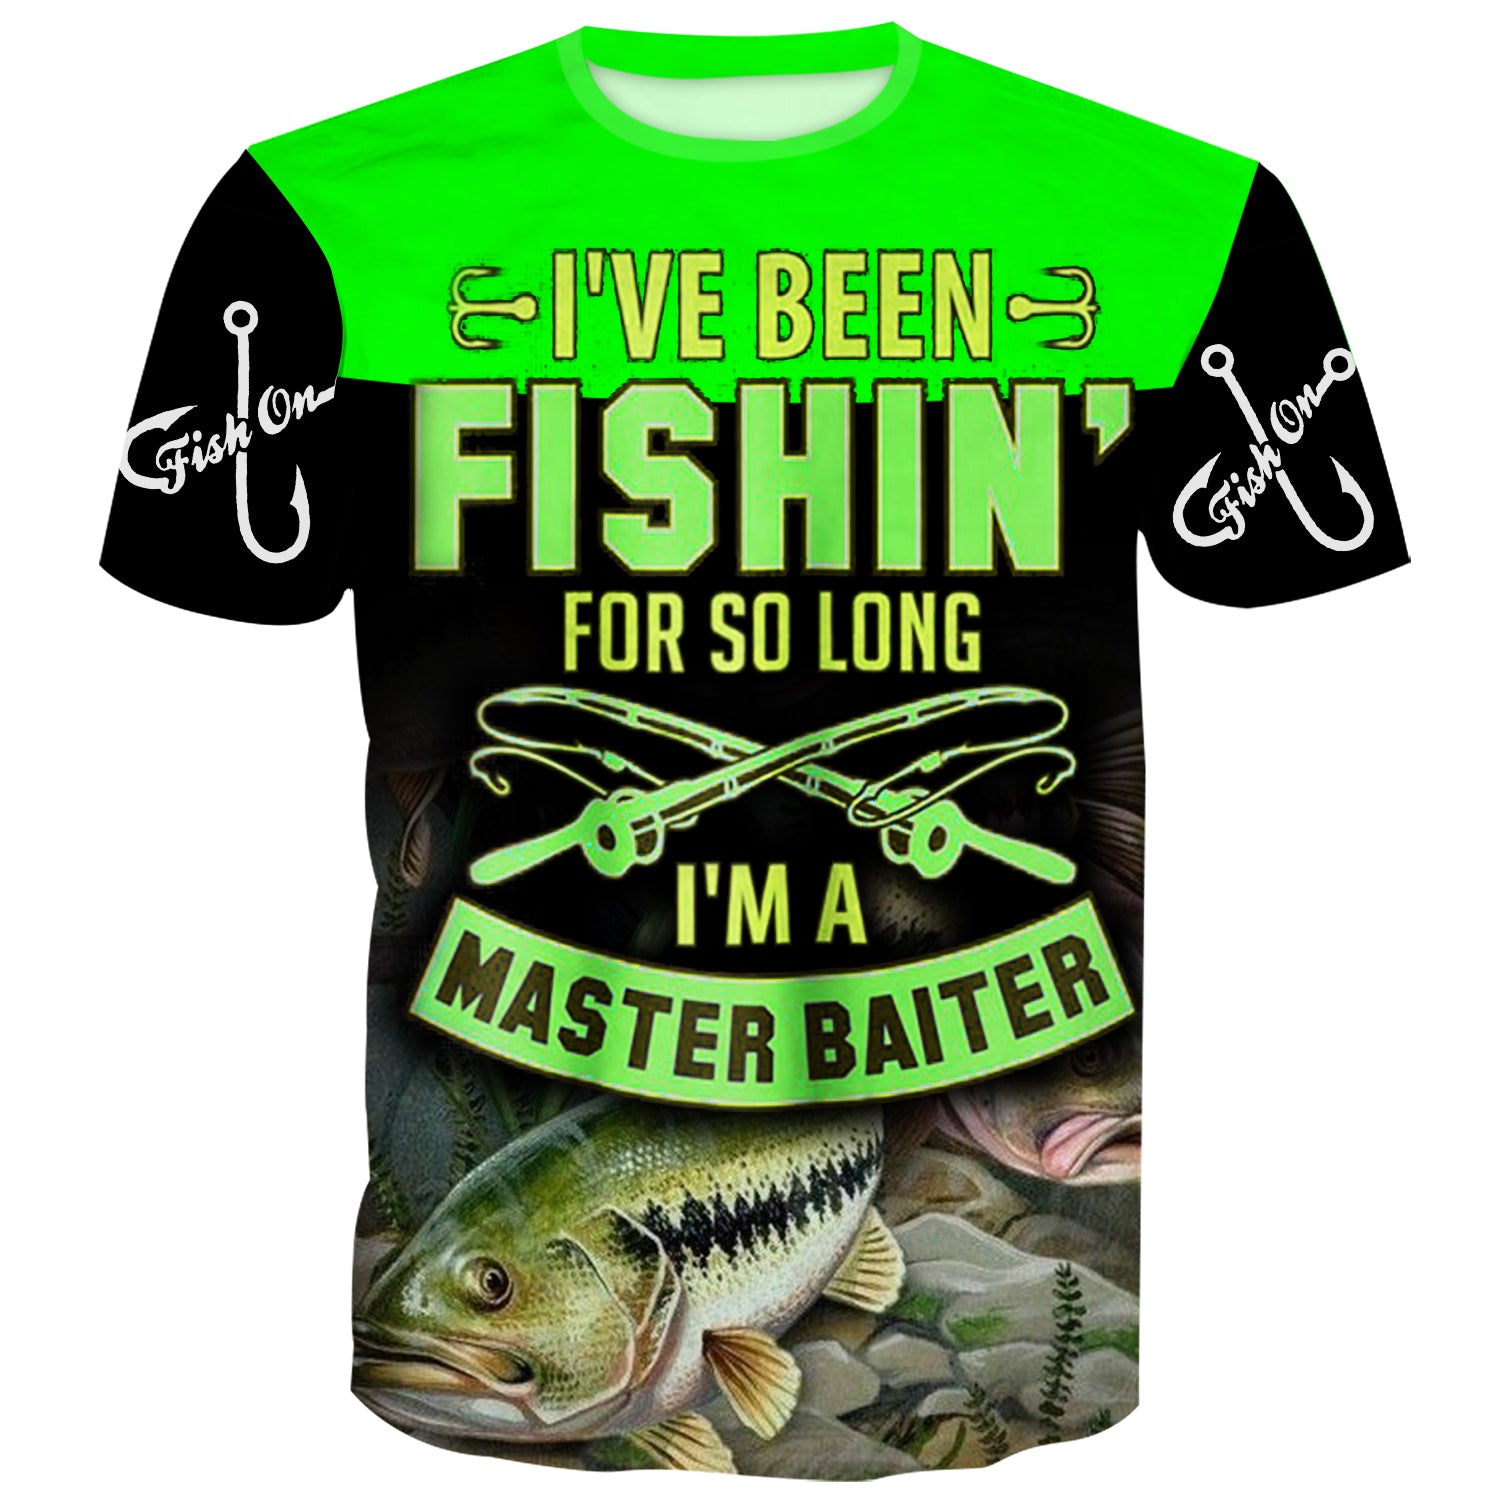 I've been Fishing for so long I'm a Master Baiter - T-Shirt